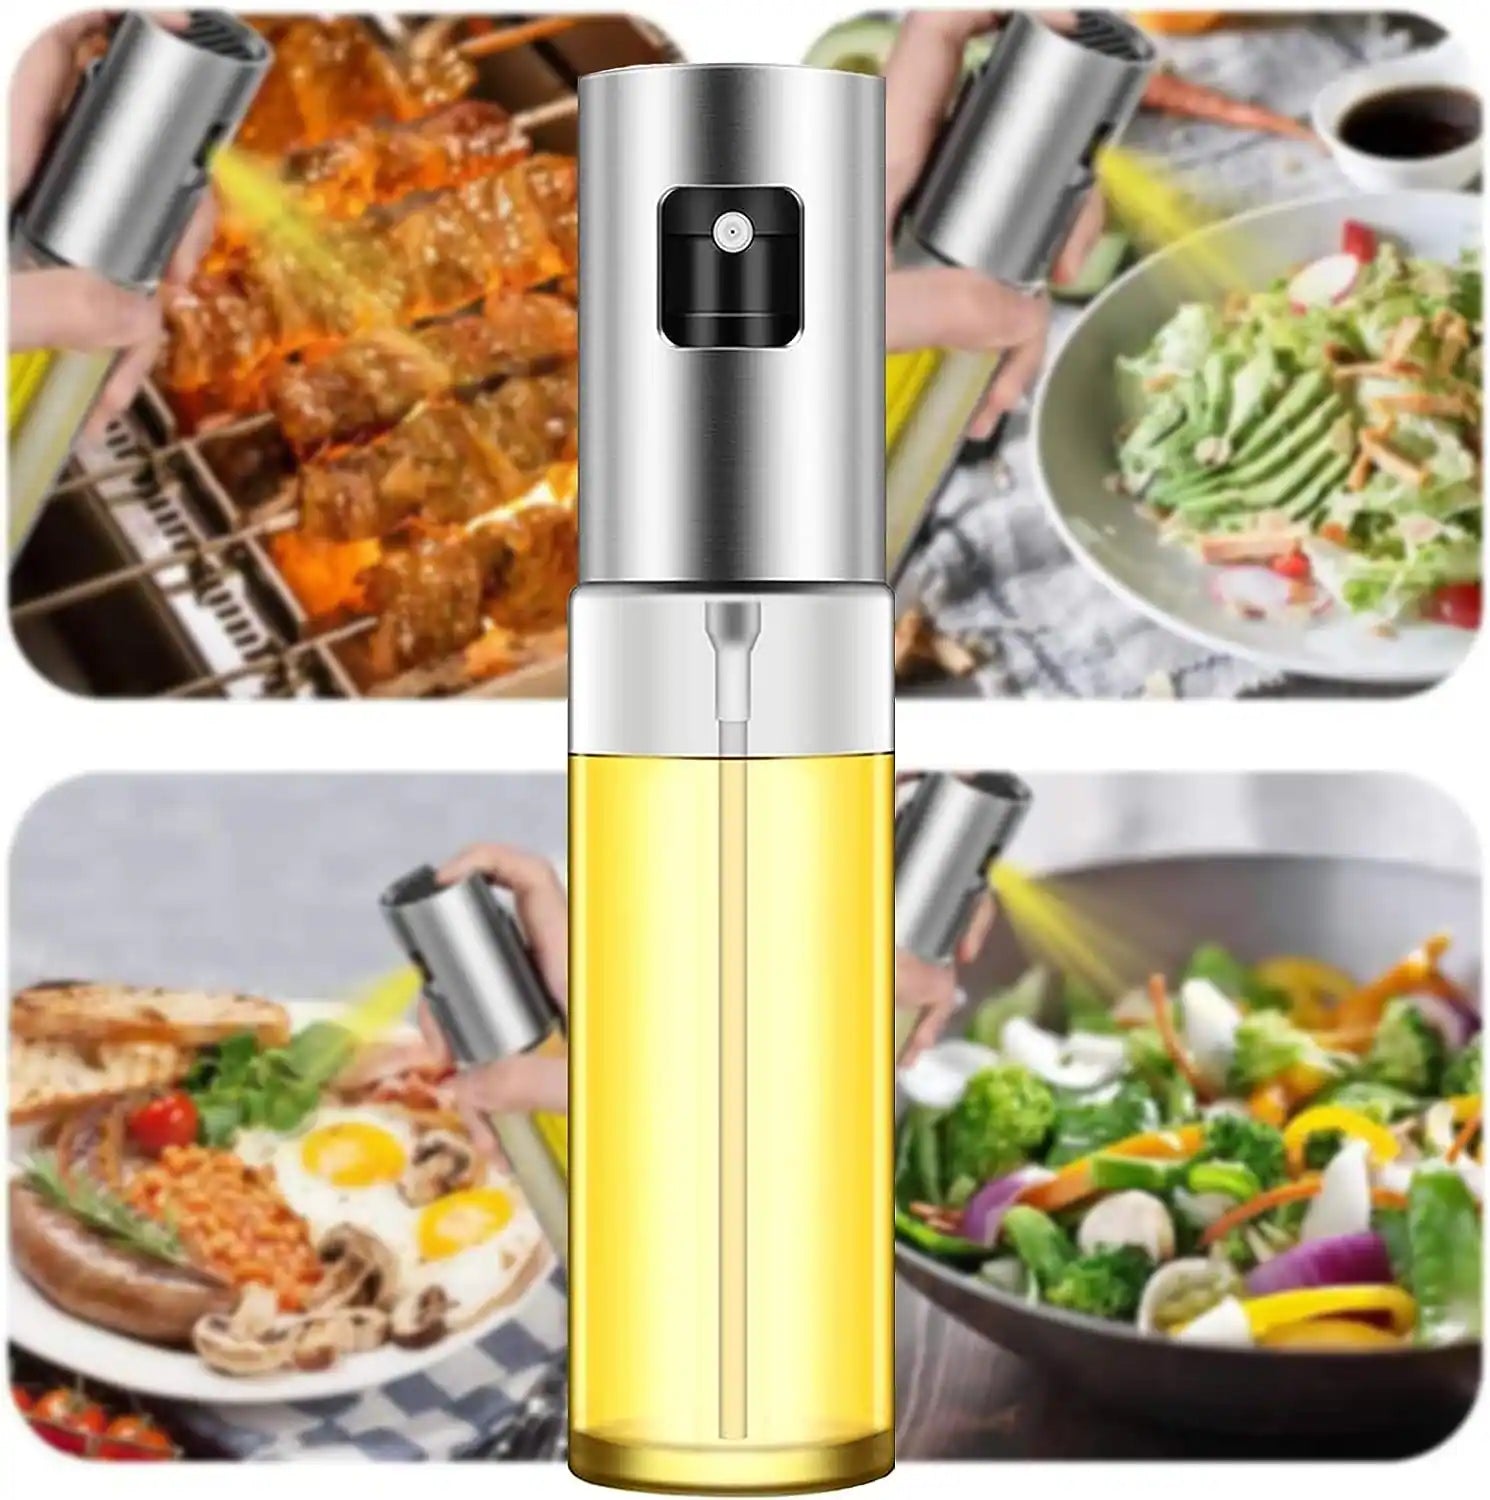 Oil Sprayer for Cooking, Salad, BBQ, Kitchen Baking